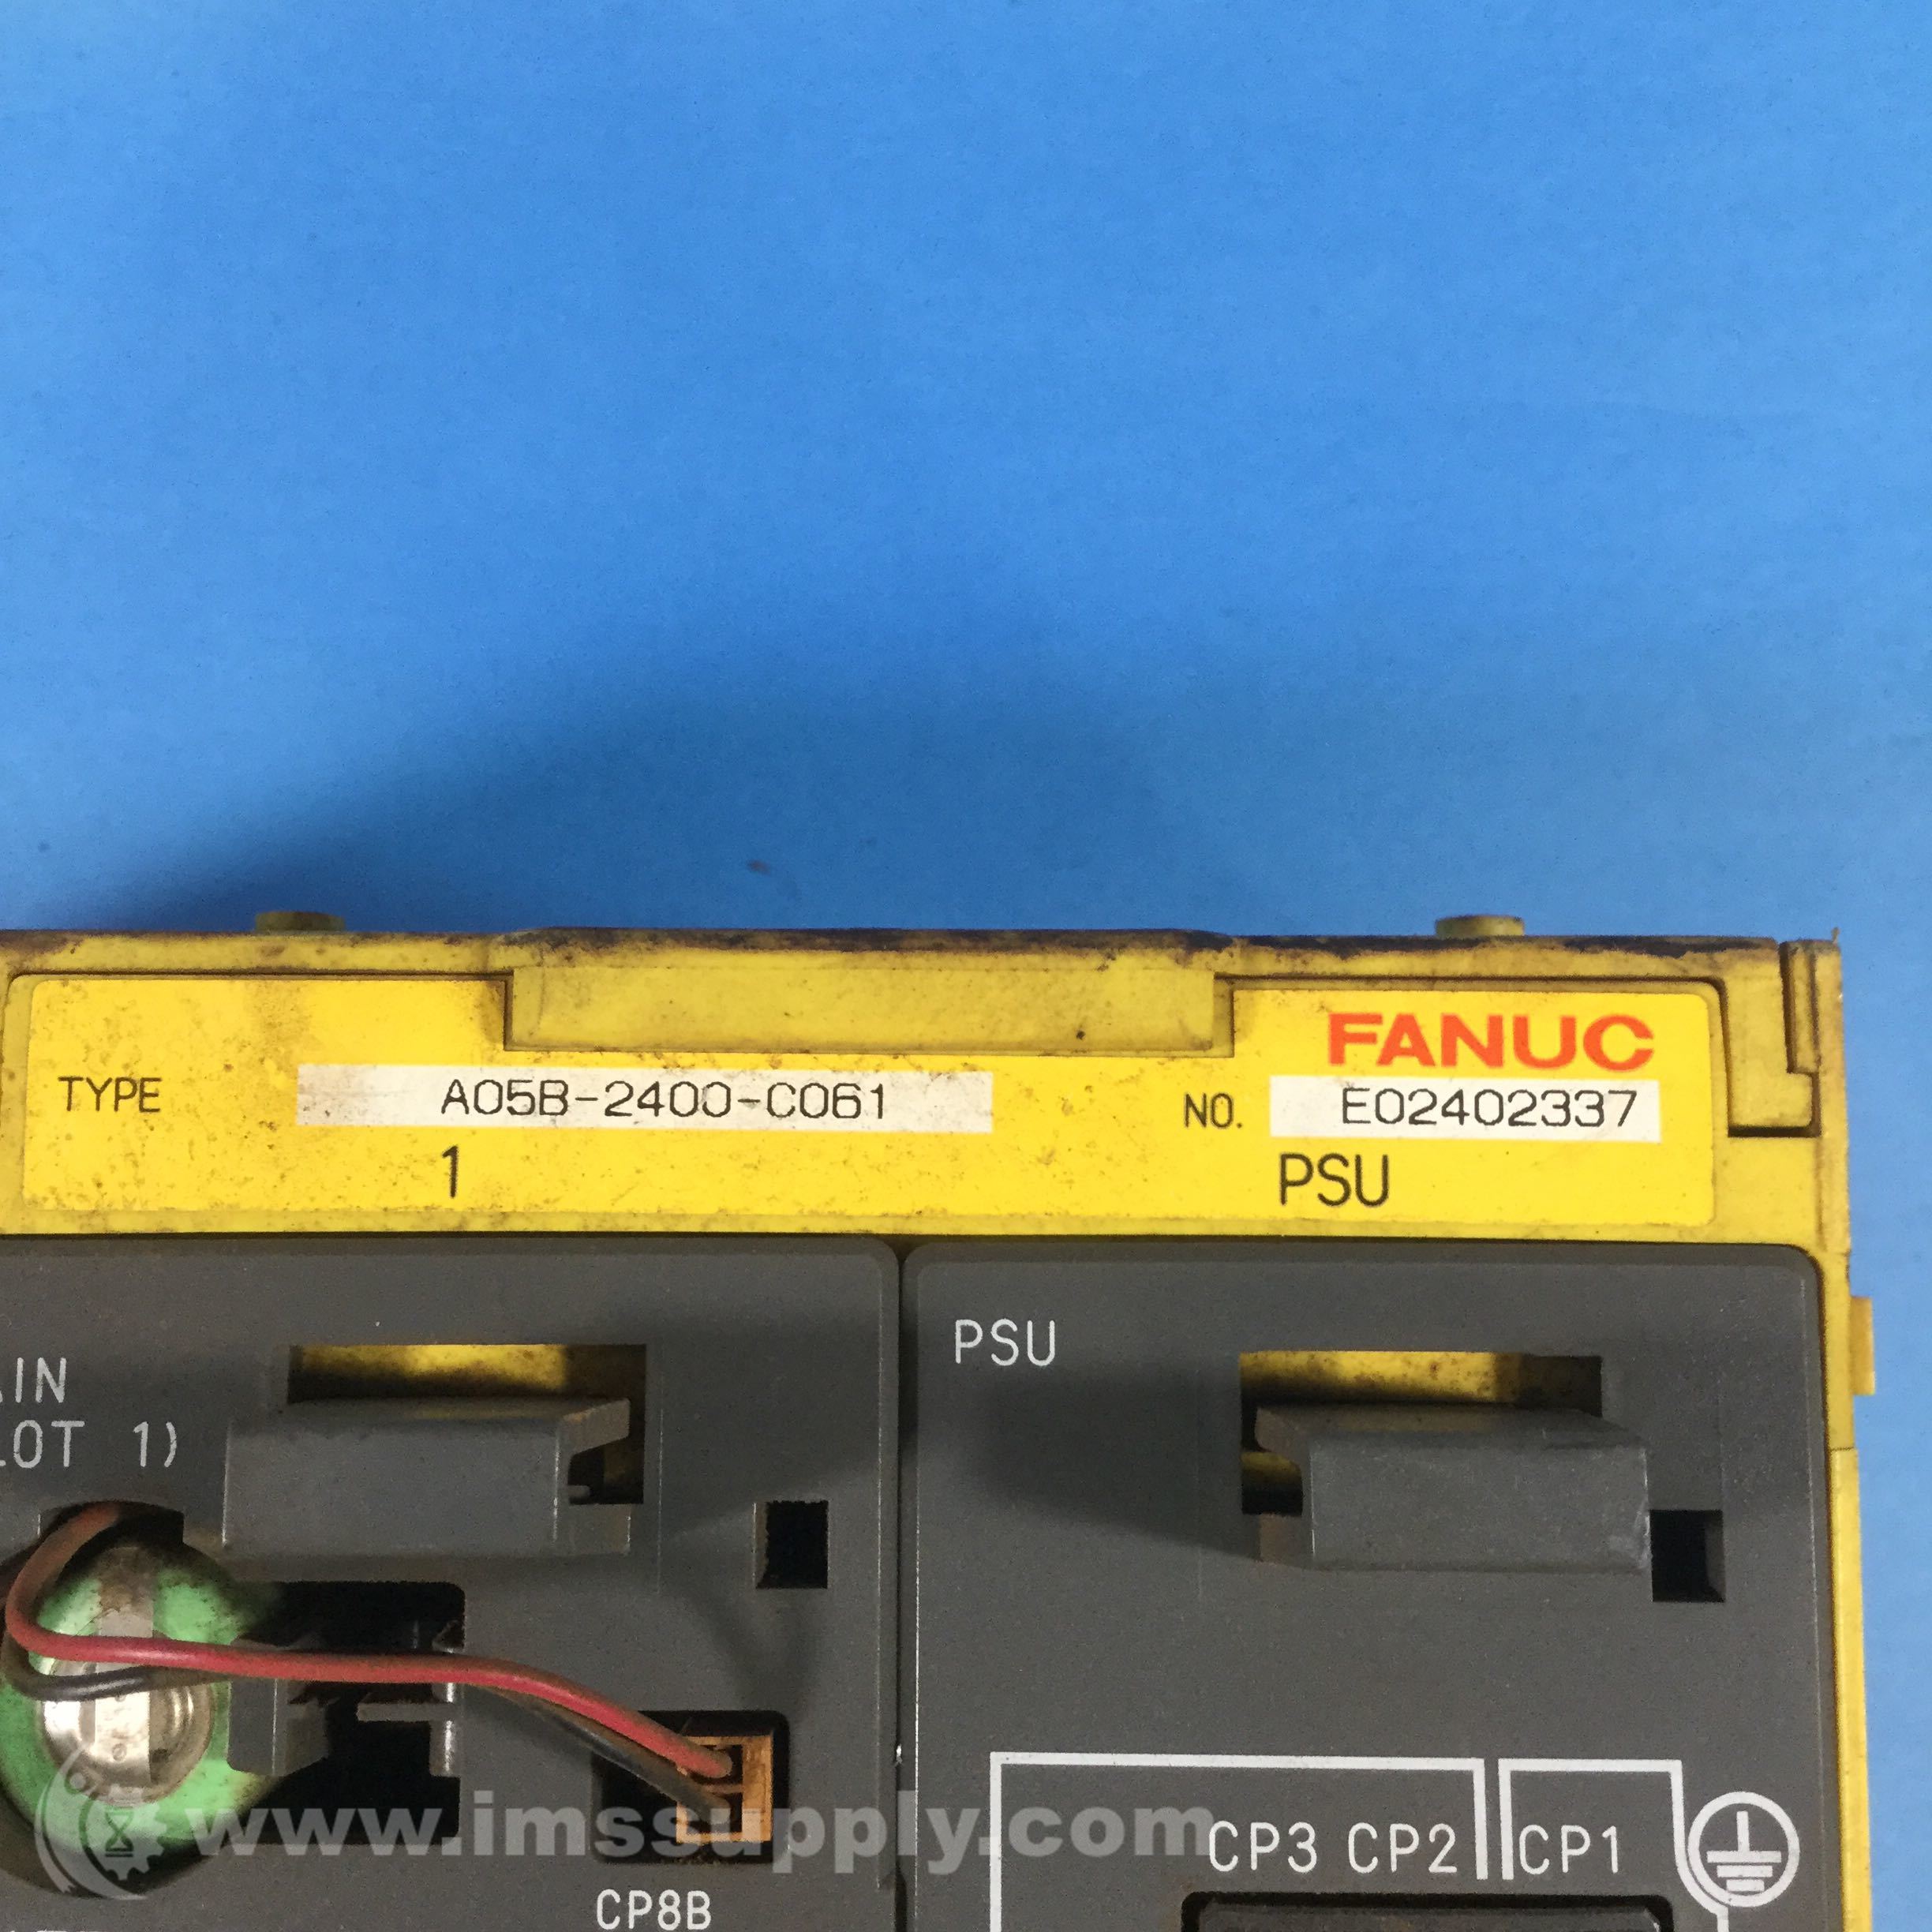 Fanuc A05B-2400-C061 4-Slot Backplace - IMS Supply